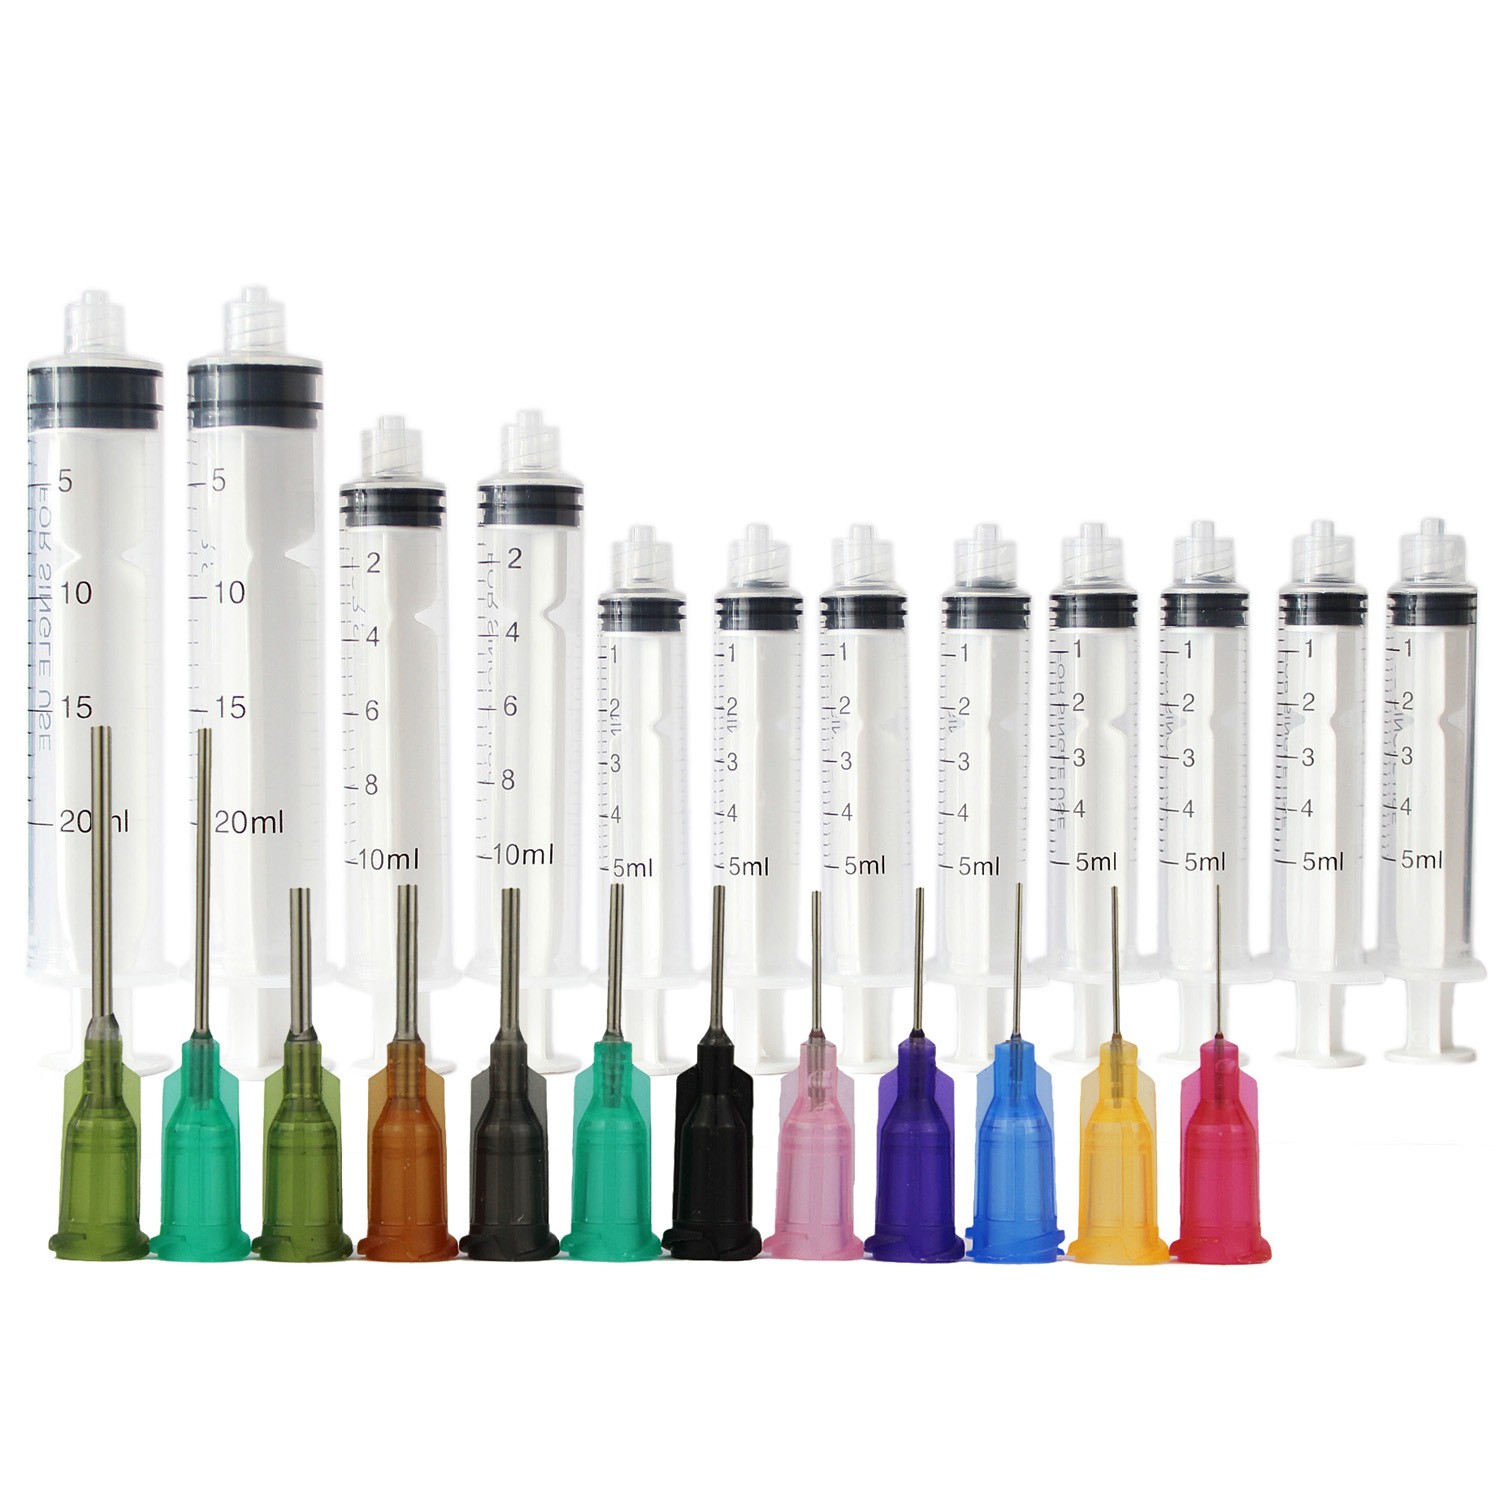 Glue Applicator Syringe for Flatback Rhinestones & Hobby Crafts, 5